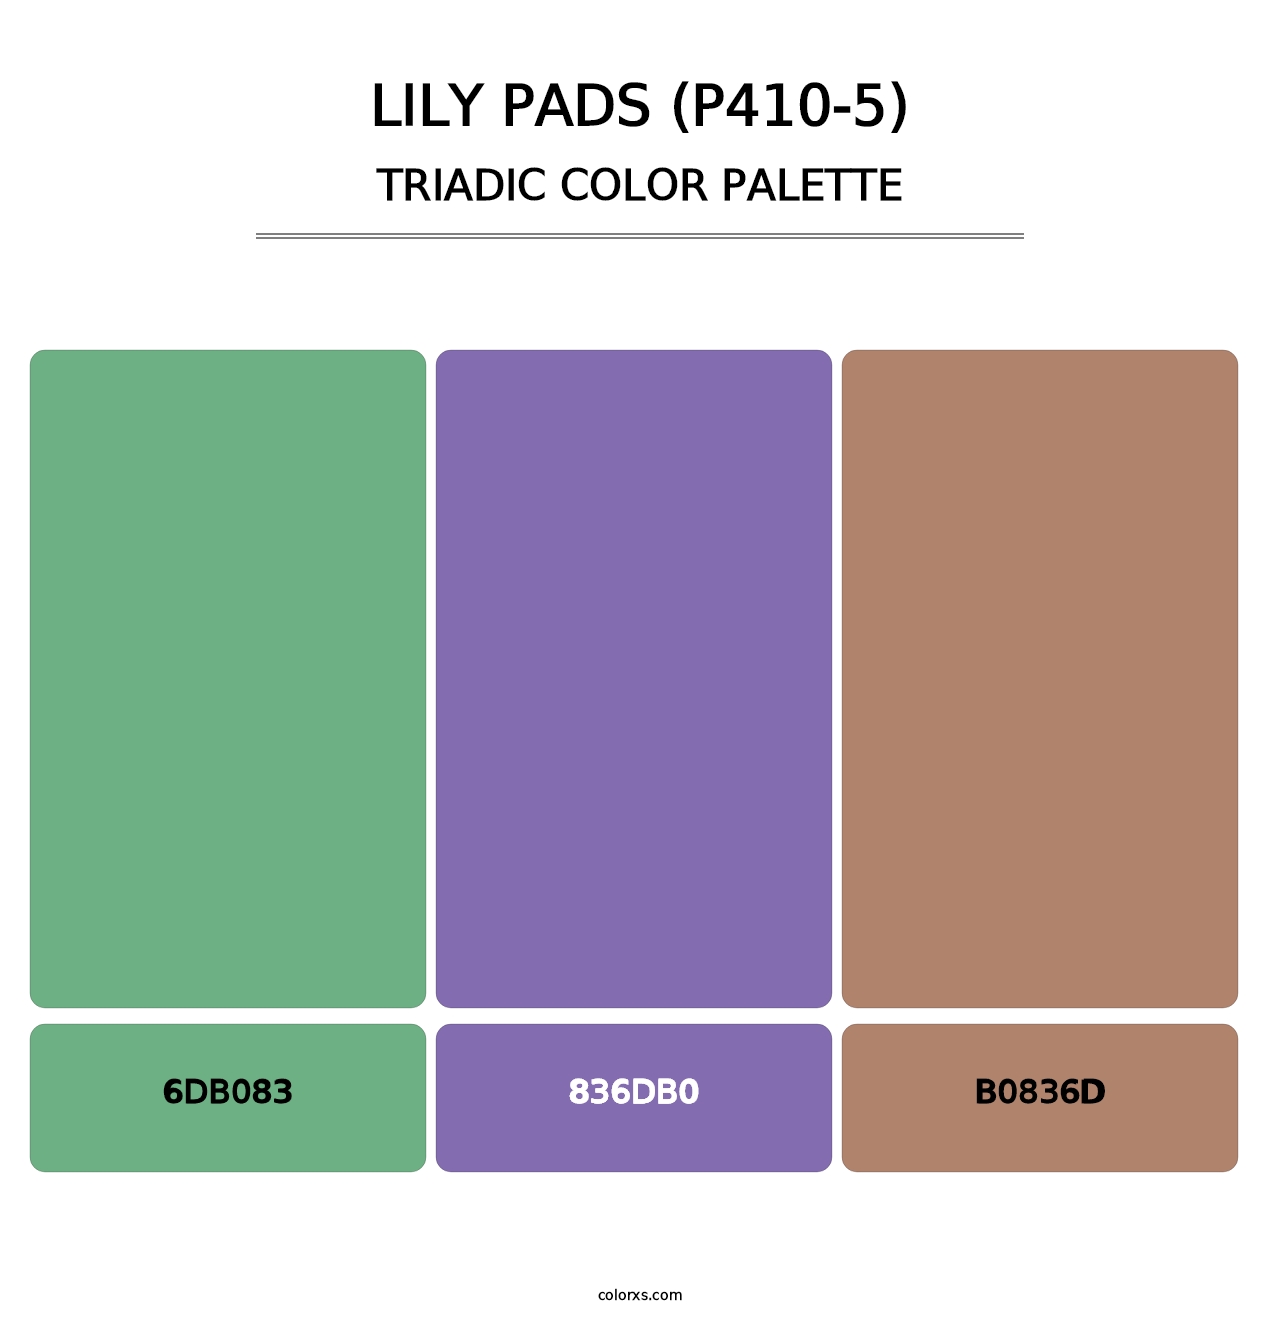 Lily Pads (P410-5) - Triadic Color Palette